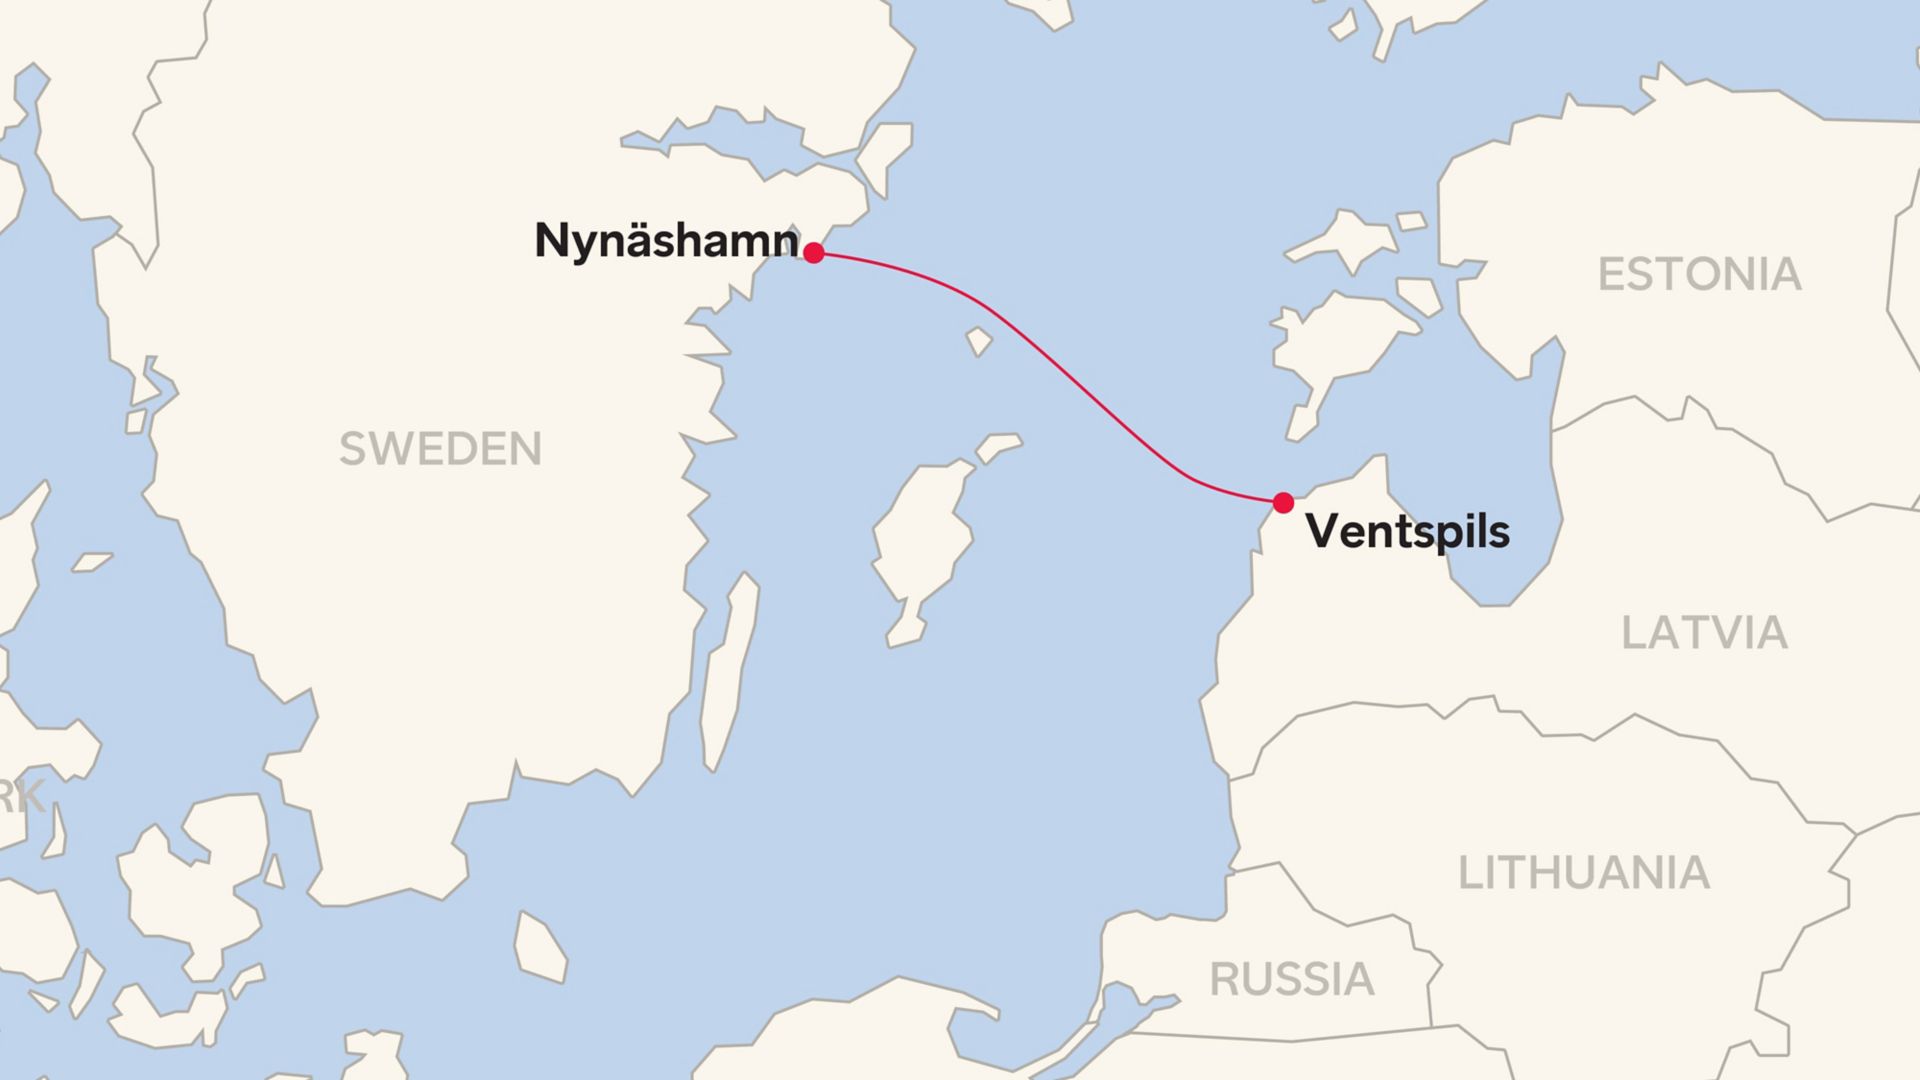 Mappa della rotta per Ventspils - Nynäshamn